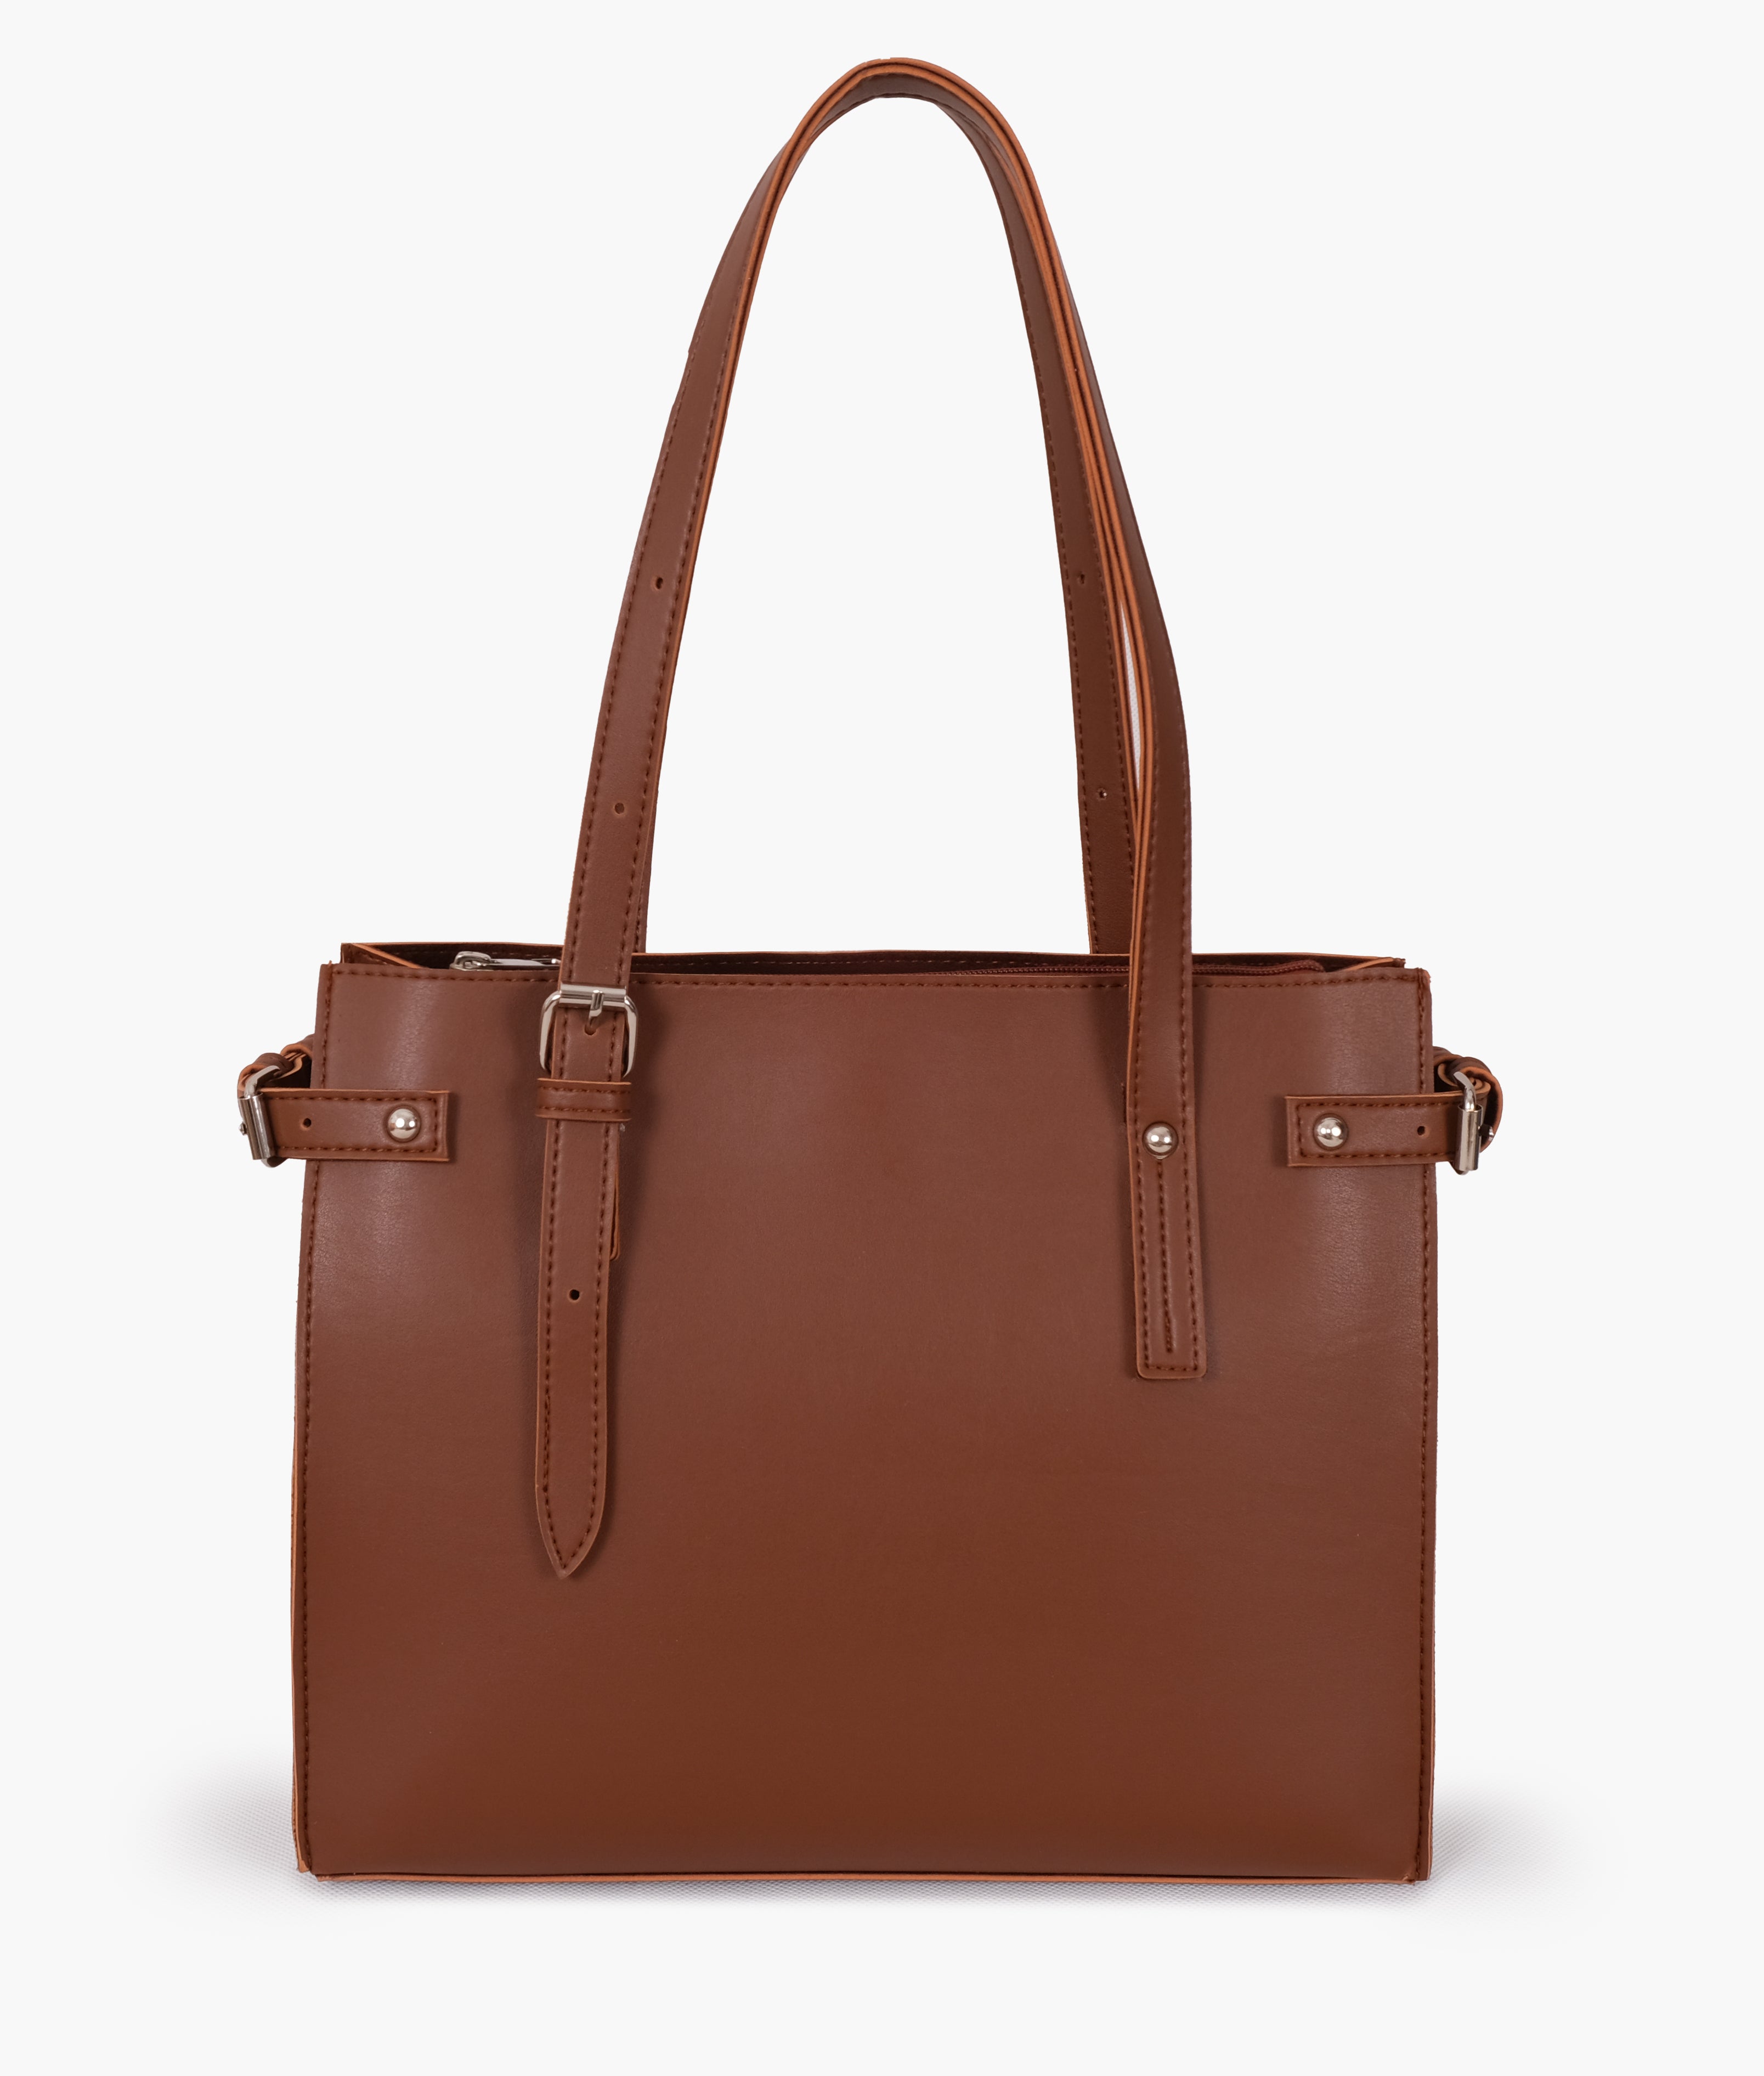 Brown satchel tote bag